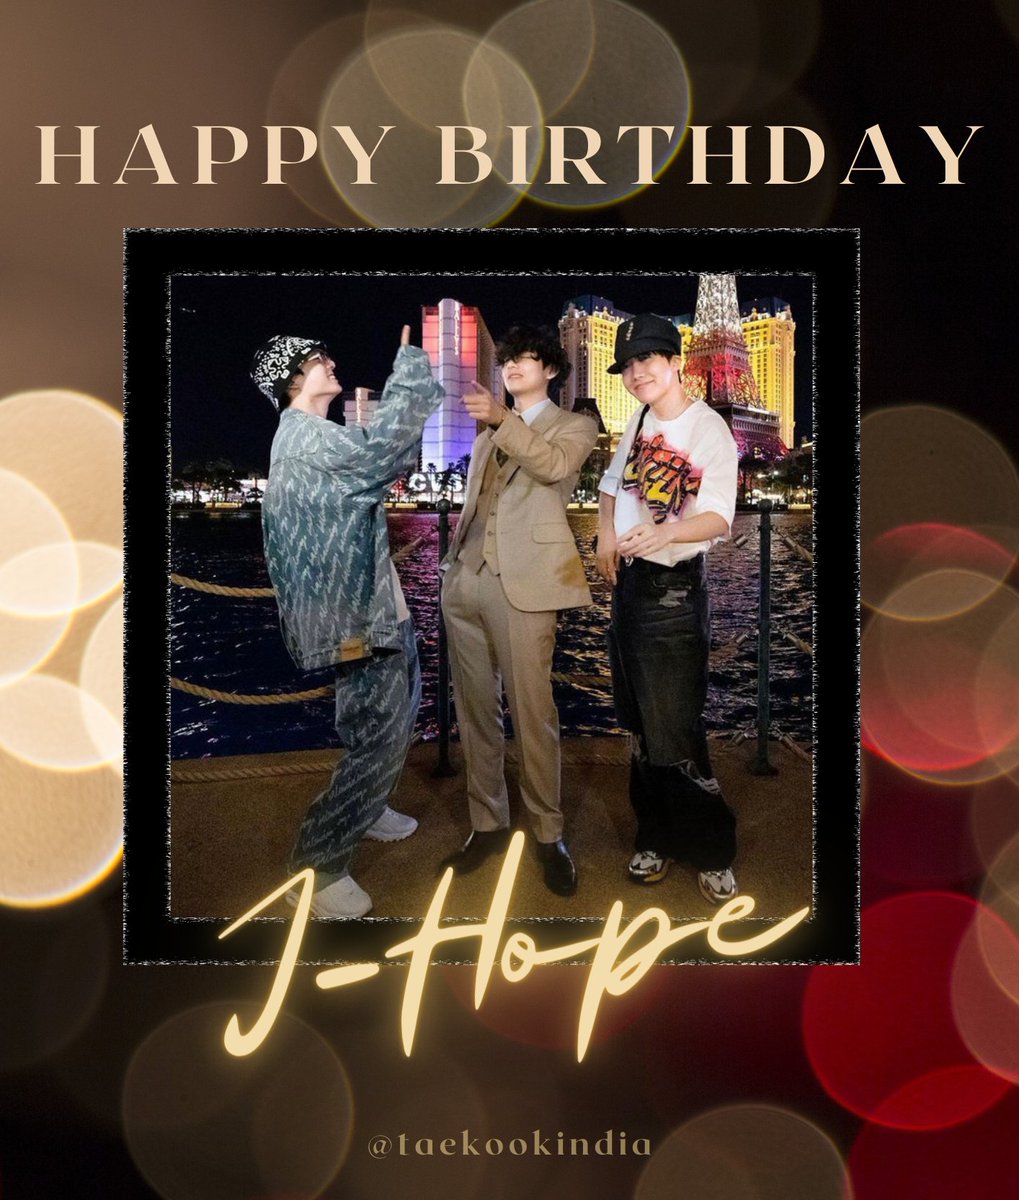 Happy Birthday J-Hope 😍💜
Stay happy and healthy ✨

#uarourhope
#HopeRightHere
#KingOfStageJhope
#PrideOfGwangjuDay
#OurEternalHope
#OurFebruaryMiracle 
#AlwaysByYourSideJhope
#AllRounderJhopeDay
#SongwriterProdigyJhope
#JhopeTrendSetter
#DanceMasterJhope
#OurForeverBlueSide